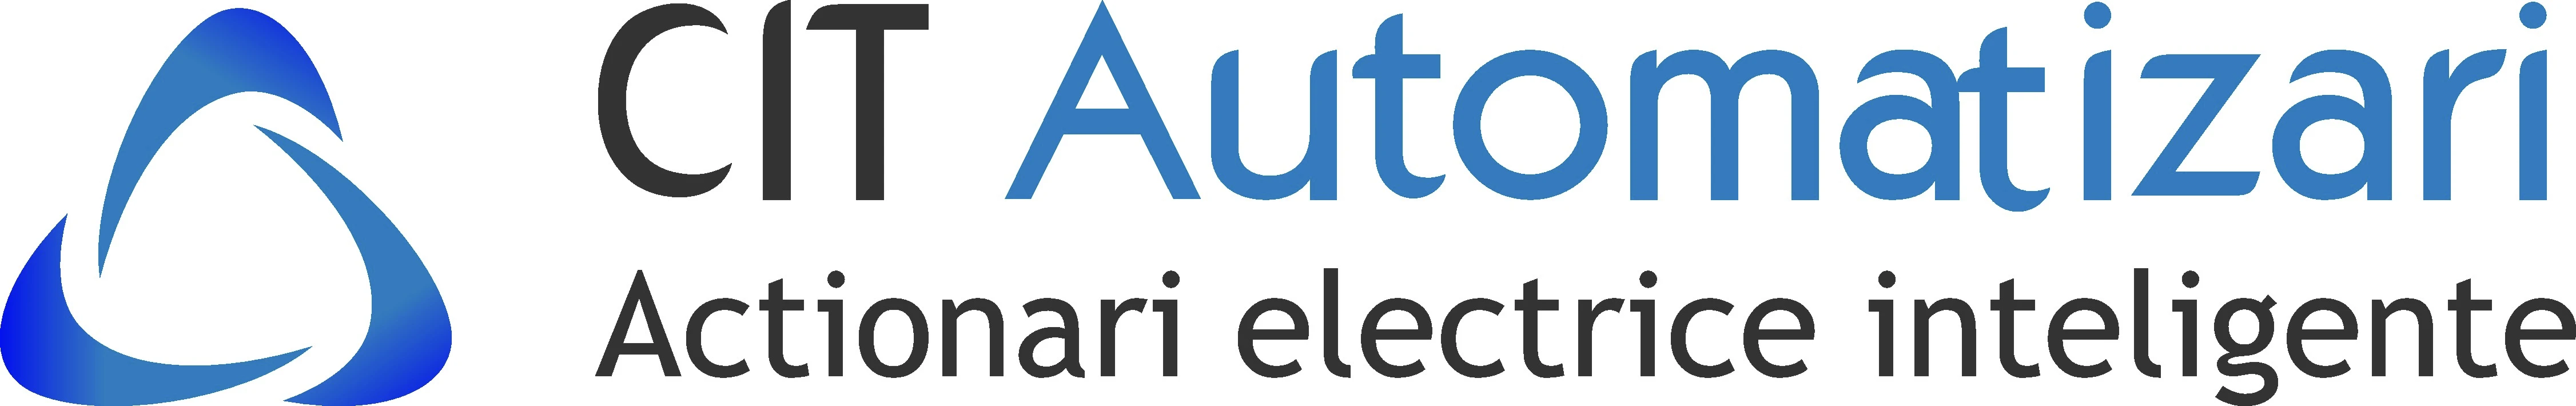 Cit Automatizari Logo